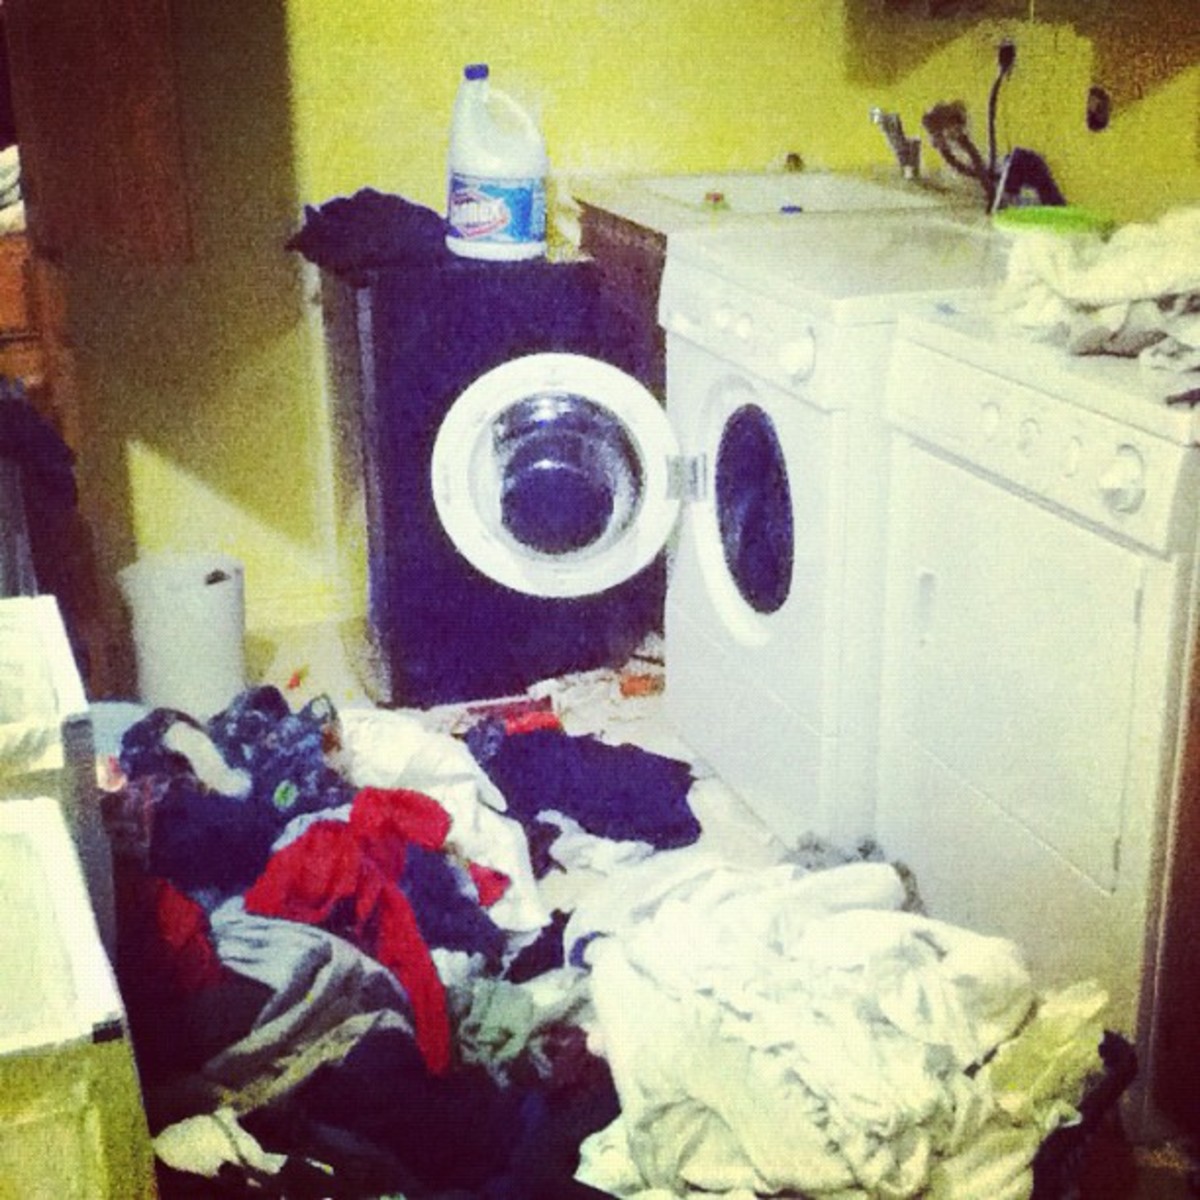 laundry room organization